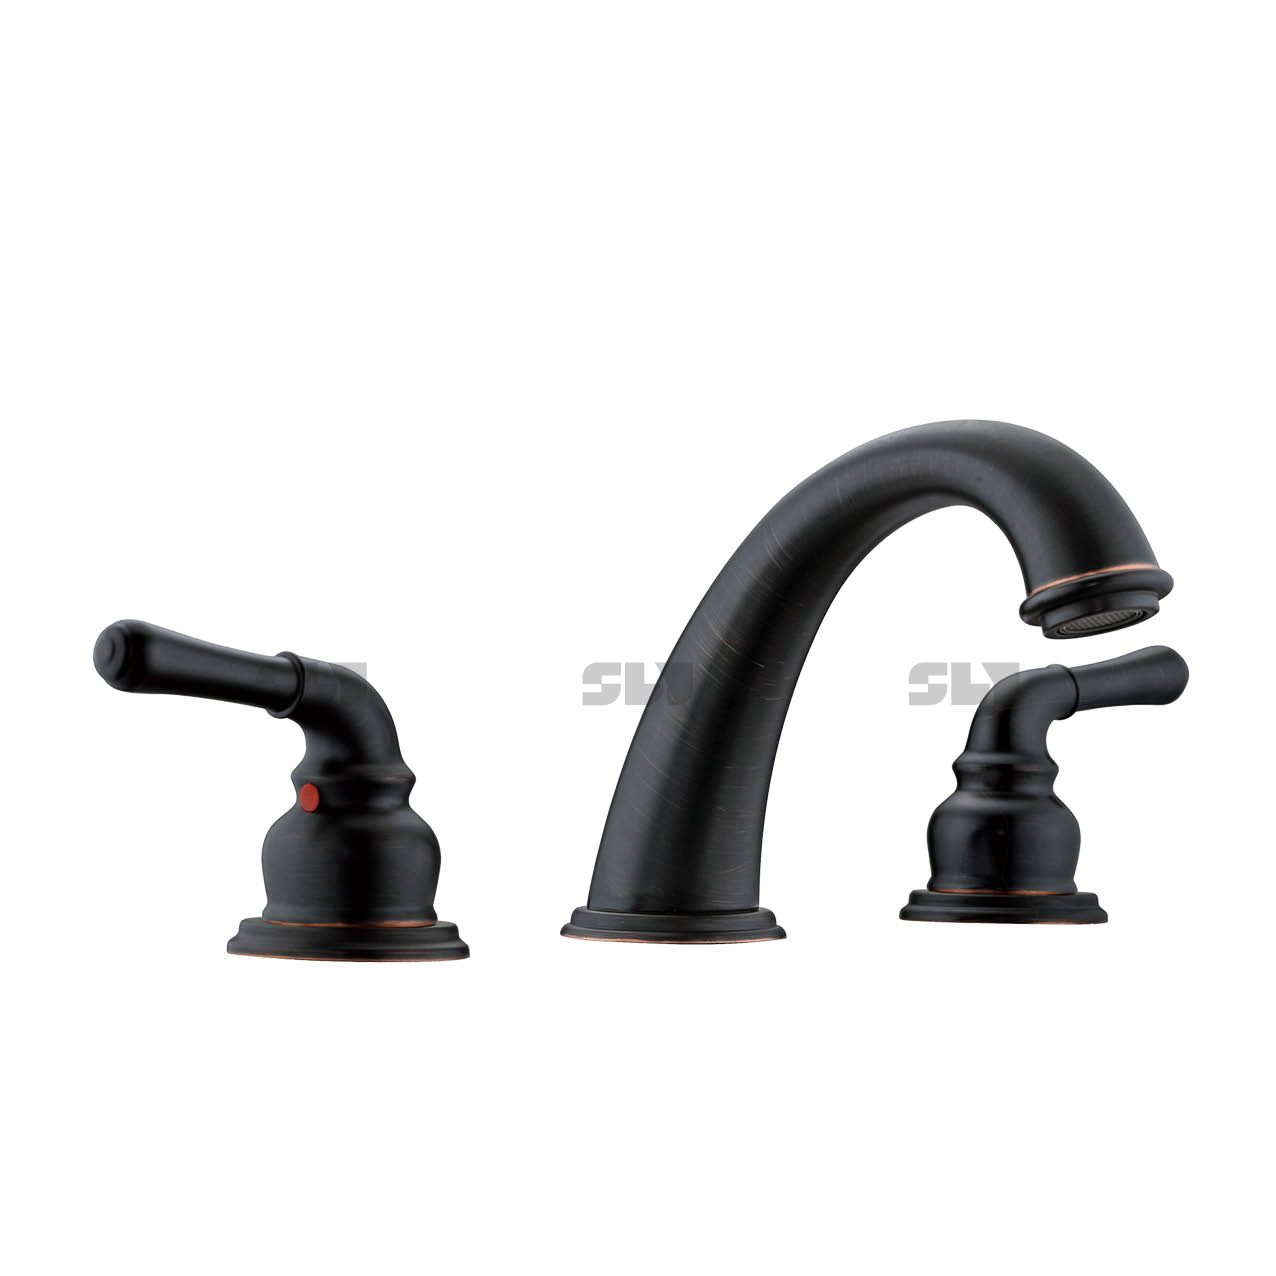 SLY 8 "Double Handle 3-Hole Brushed Wash Basin Faucet